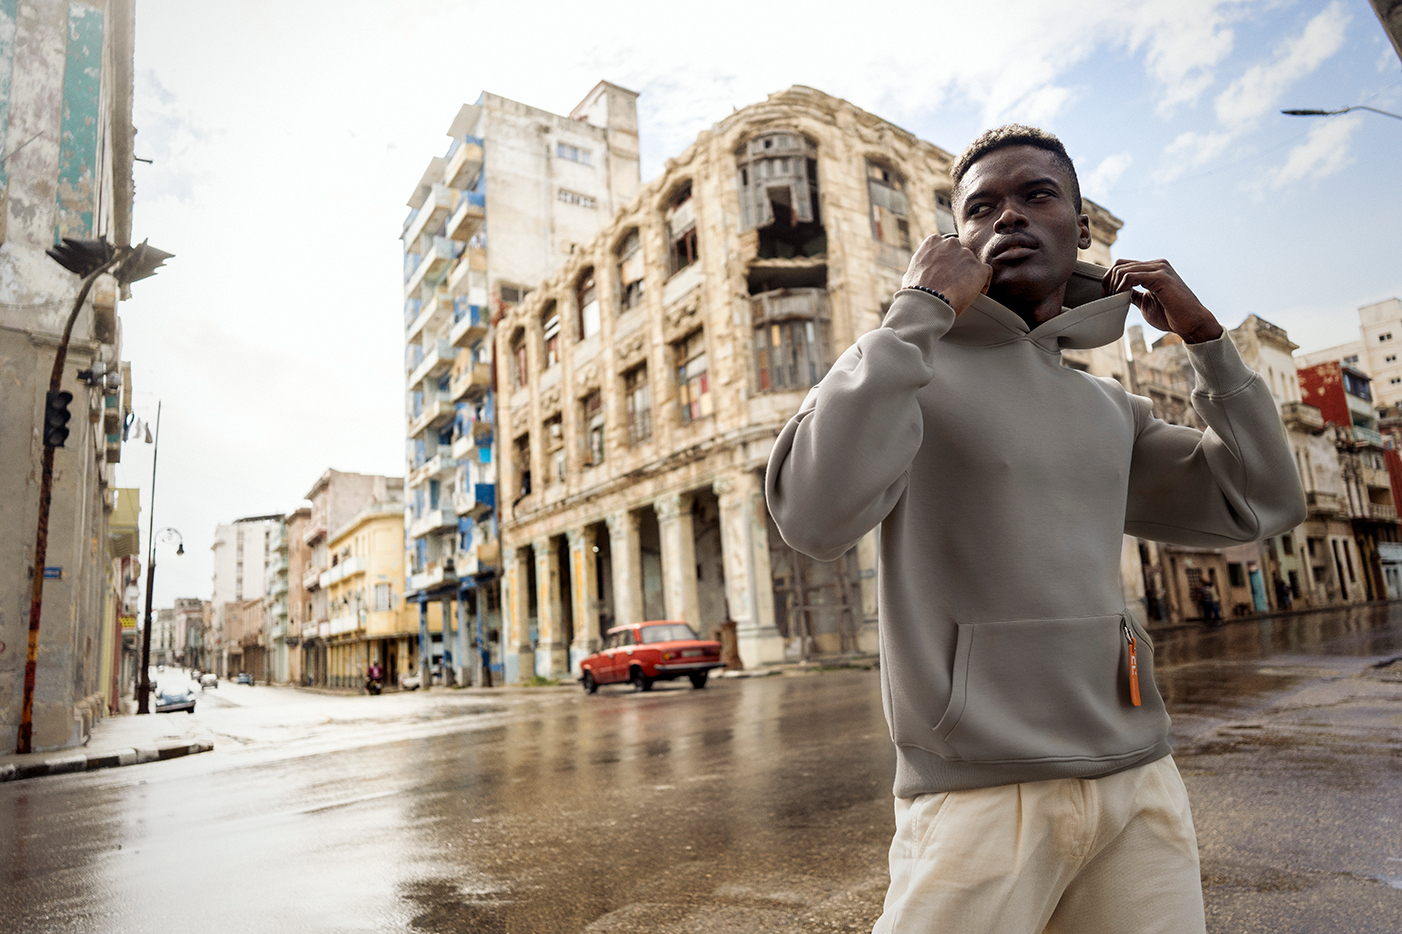 Load video: PJELLE. takes you to vibrant Havana, Cuba